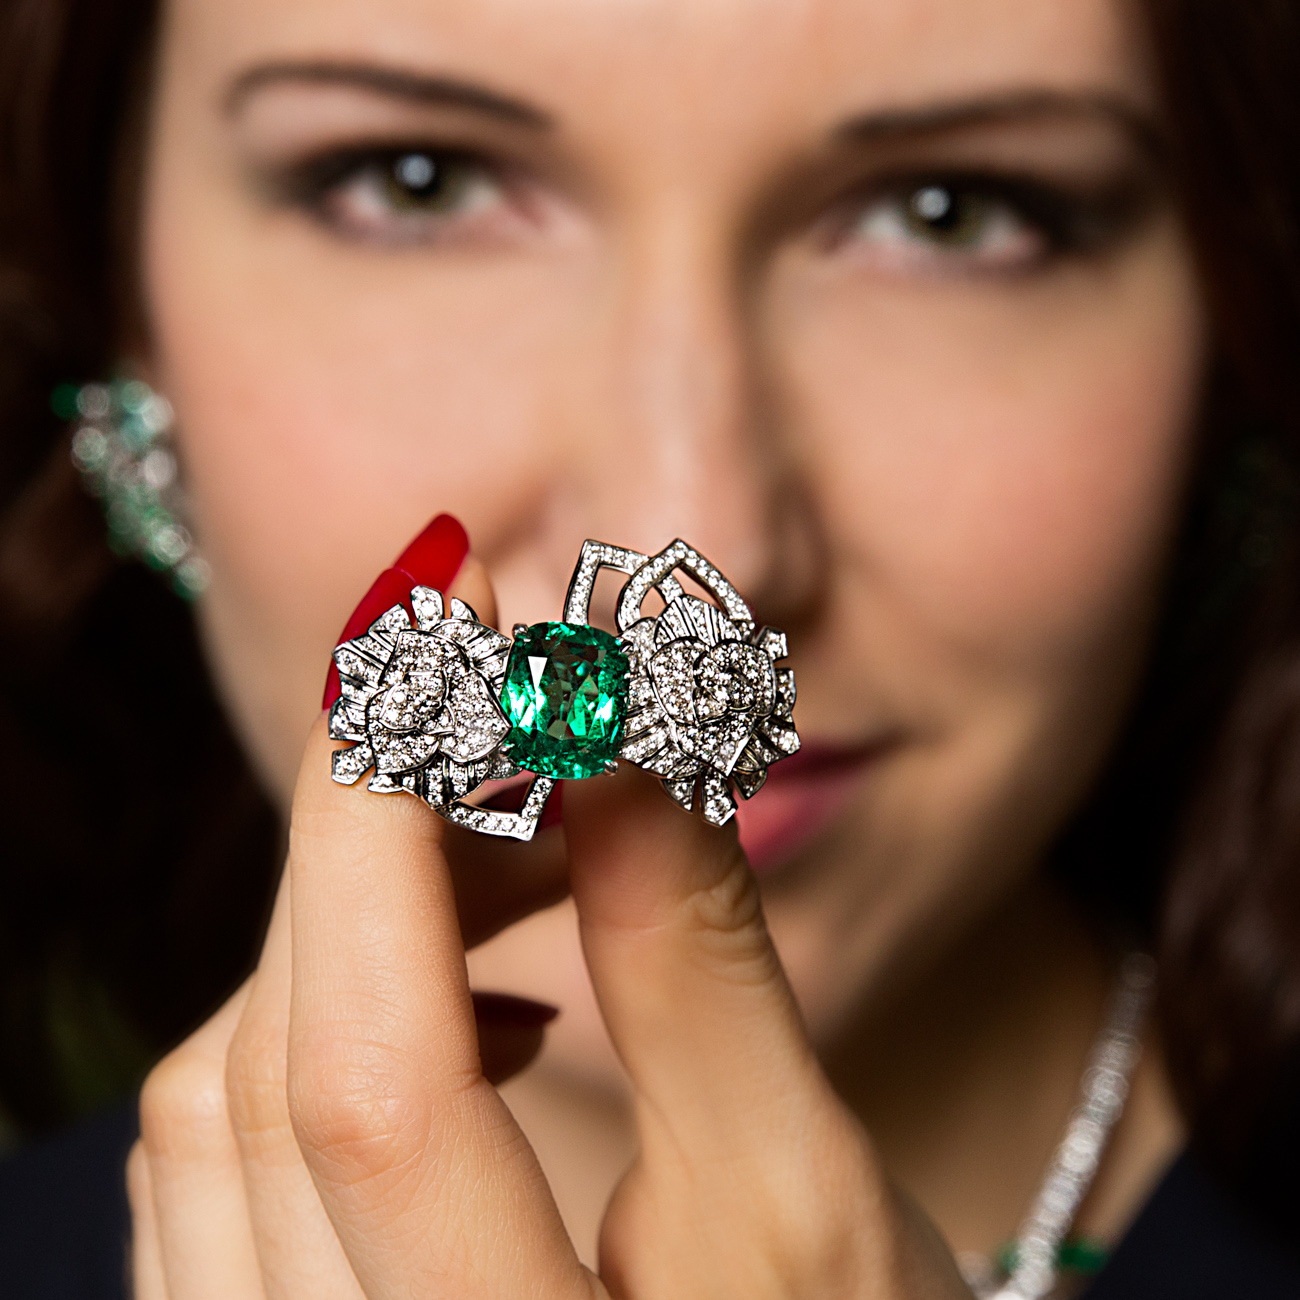 Katarina Perez and Piaget Jewelry